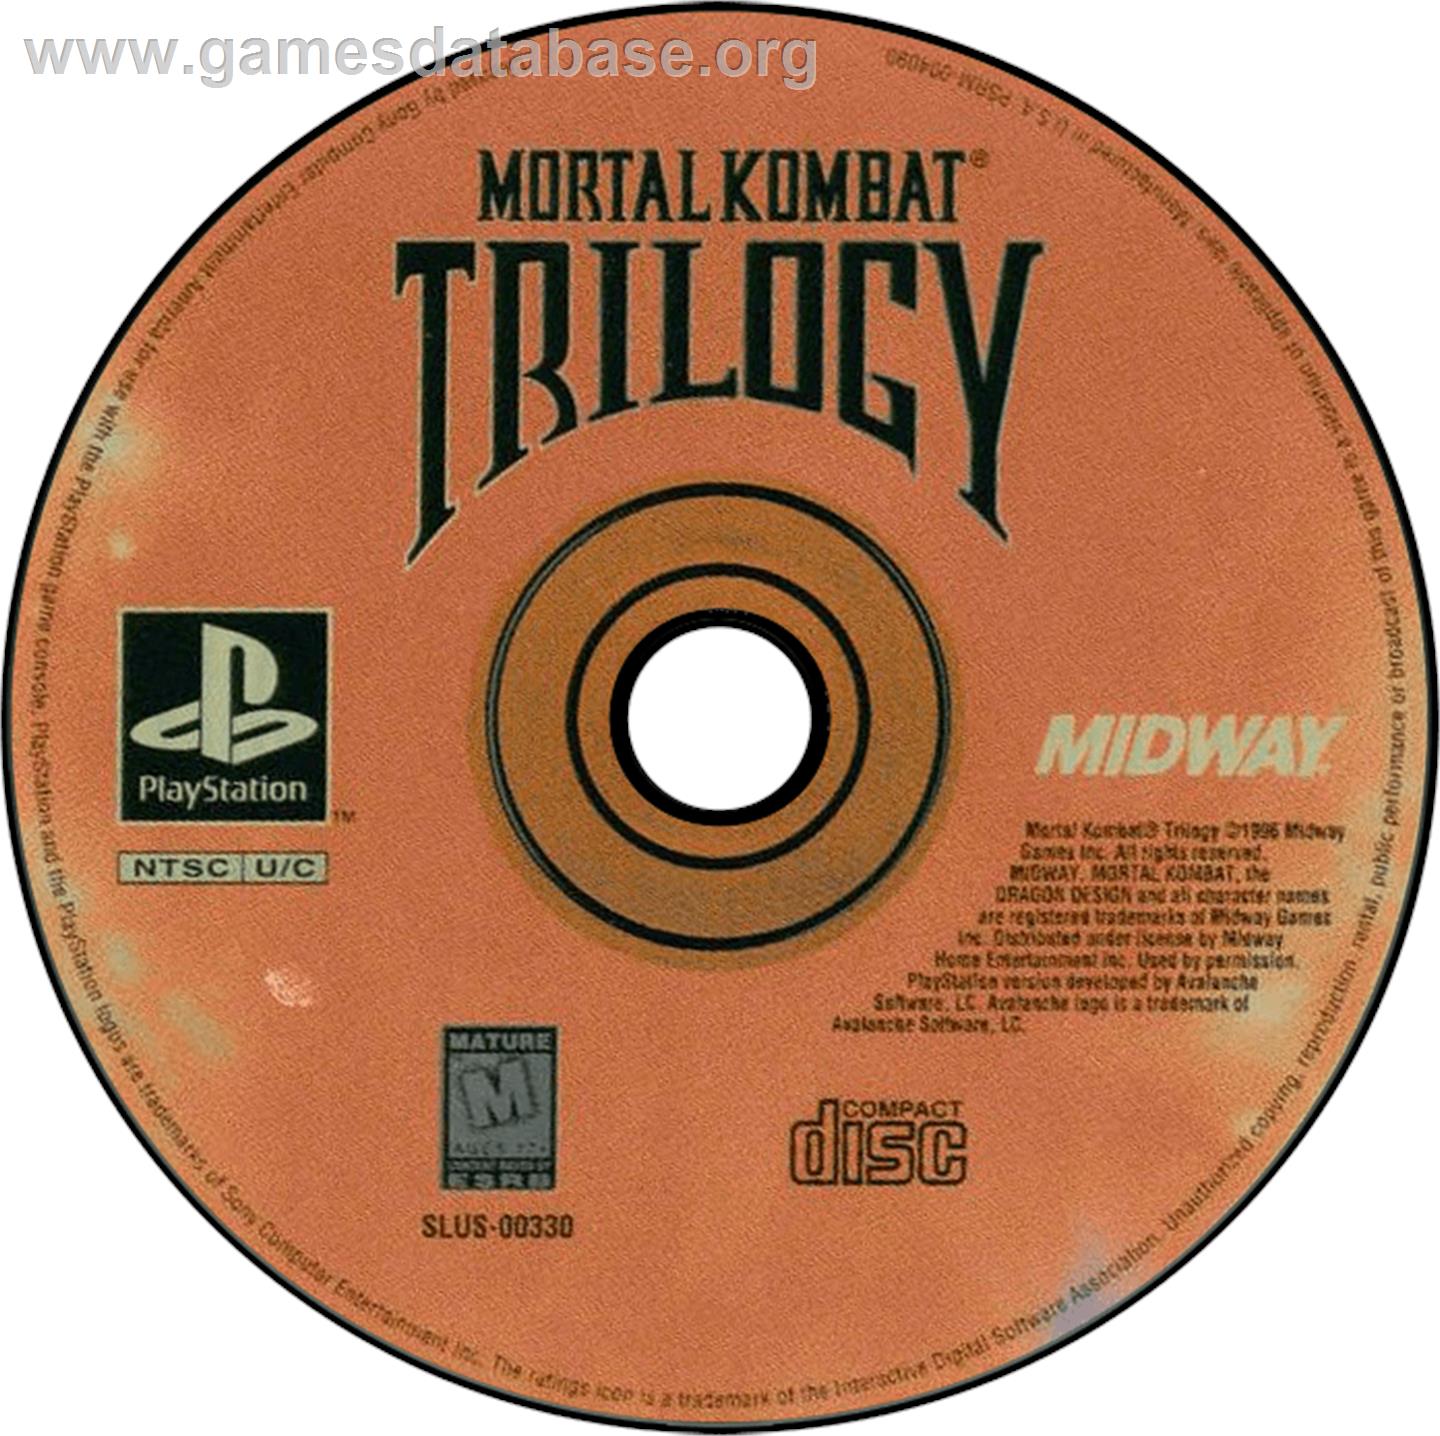 Mortal Kombat Trilogy - Sony Playstation - Artwork - Disc